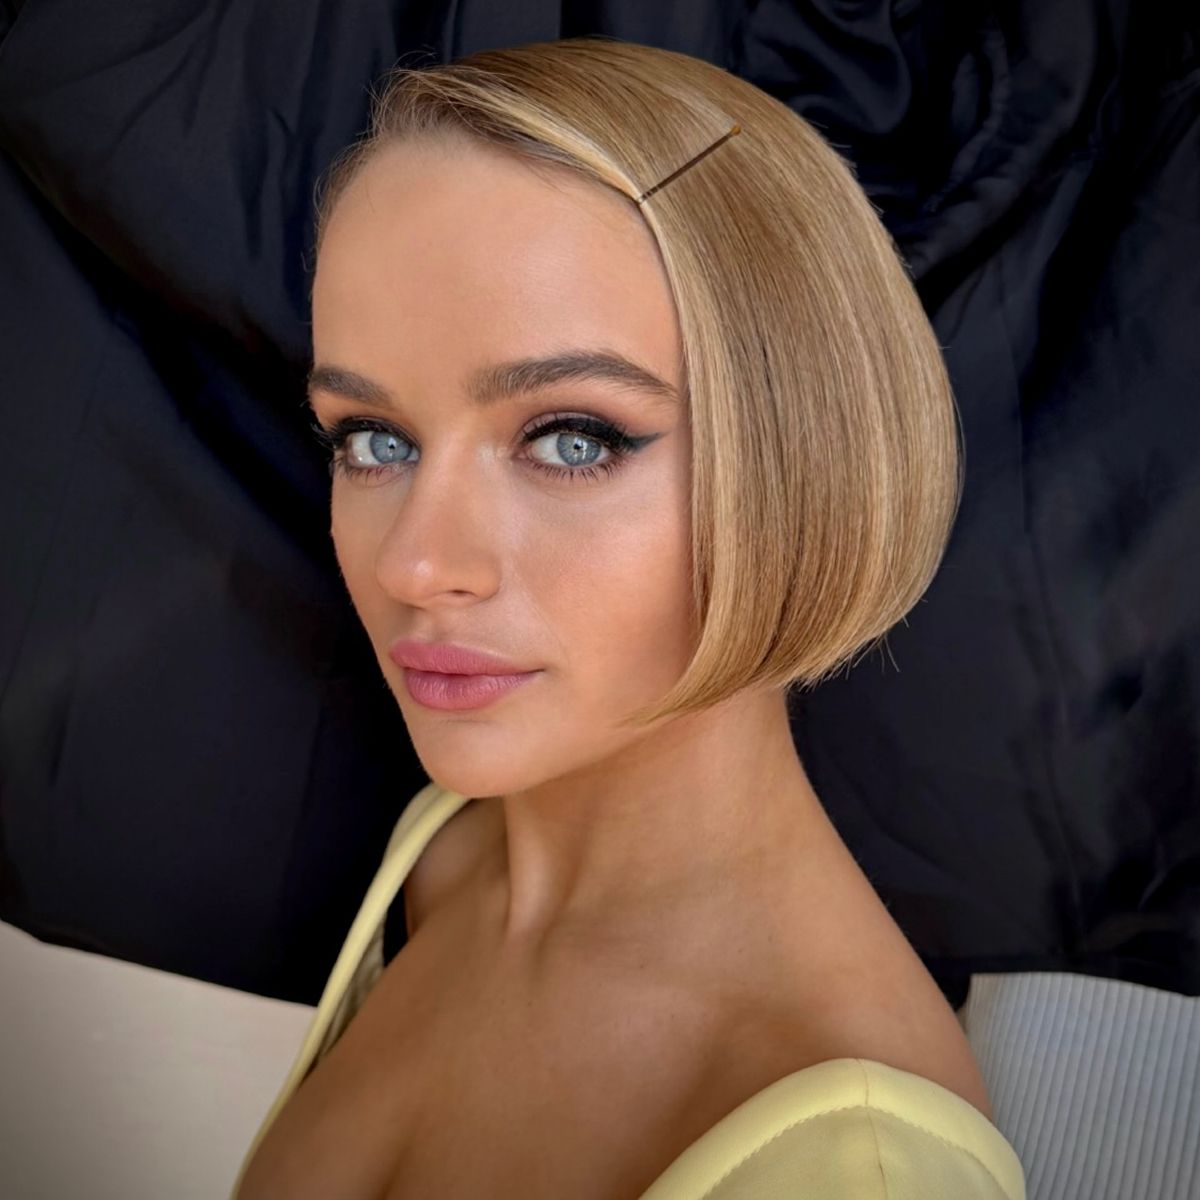 A Celebrity Hairstylist Shares Details on the Prada Bob